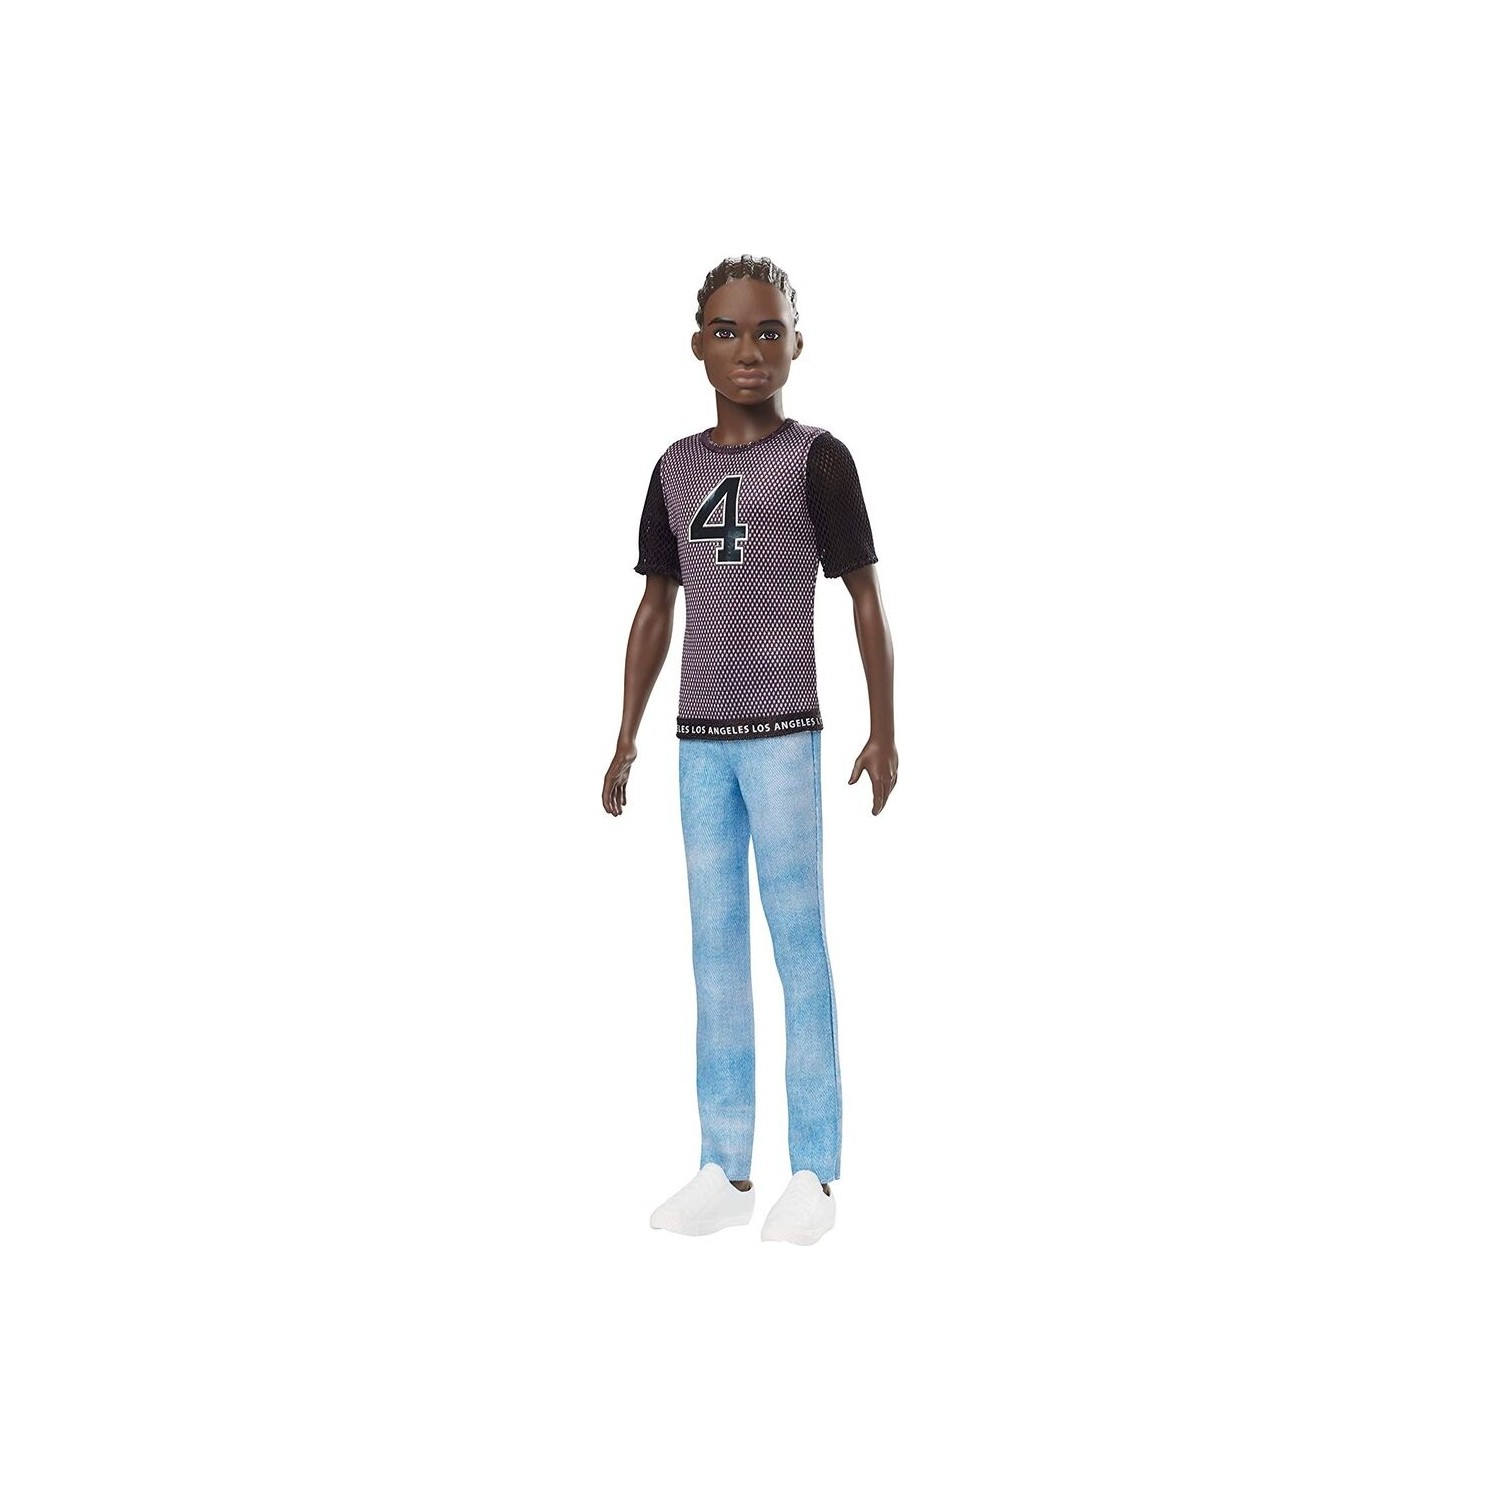 Кукла Barbie Кен DWK44-GDV13 barbie комплект одежды для кена dwg75 cfy02 синий зеленый